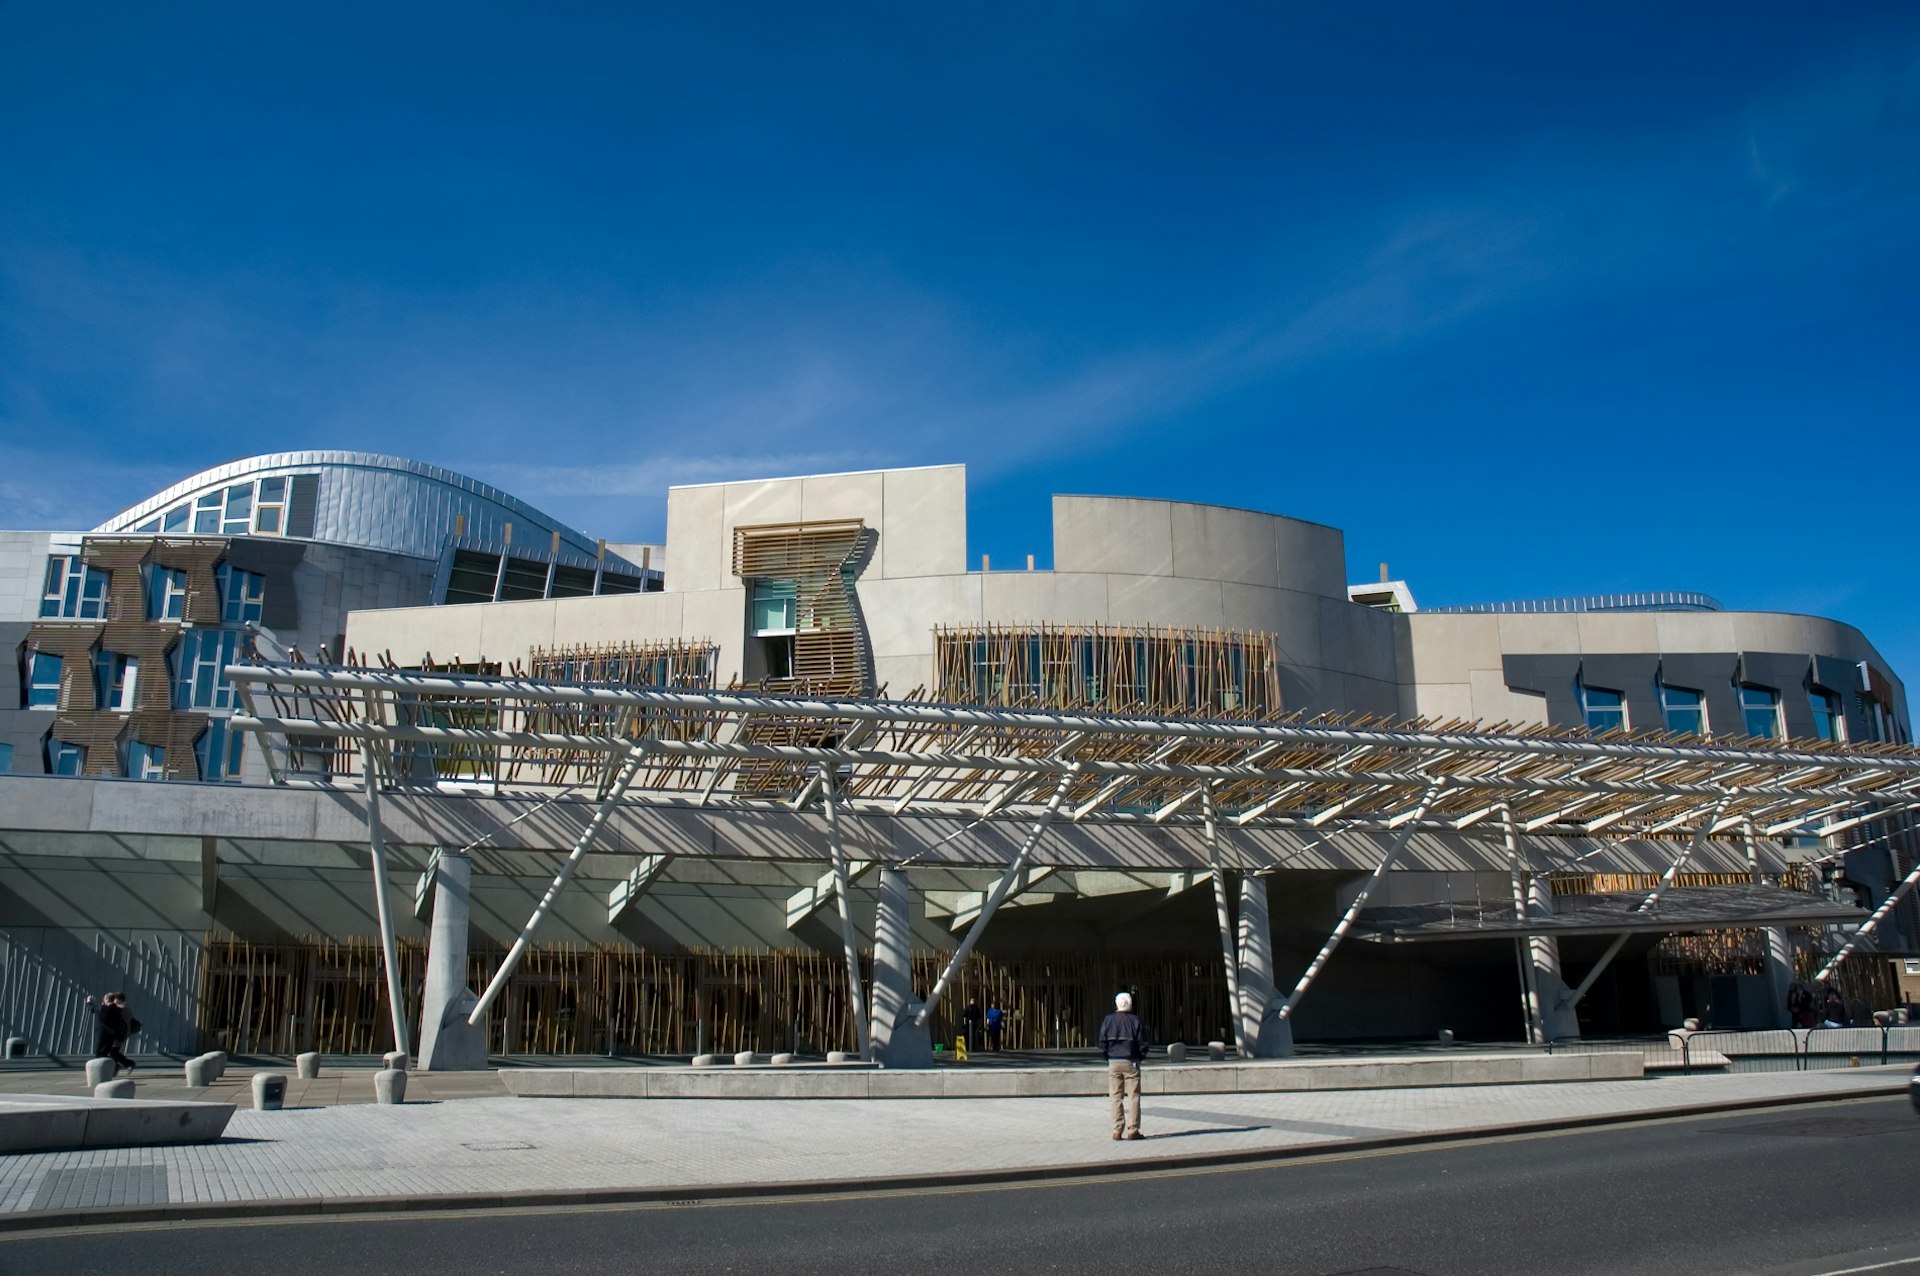 The exterior of the Scottish Parliament Building, Edinburgh, Scotland, United Kingdom